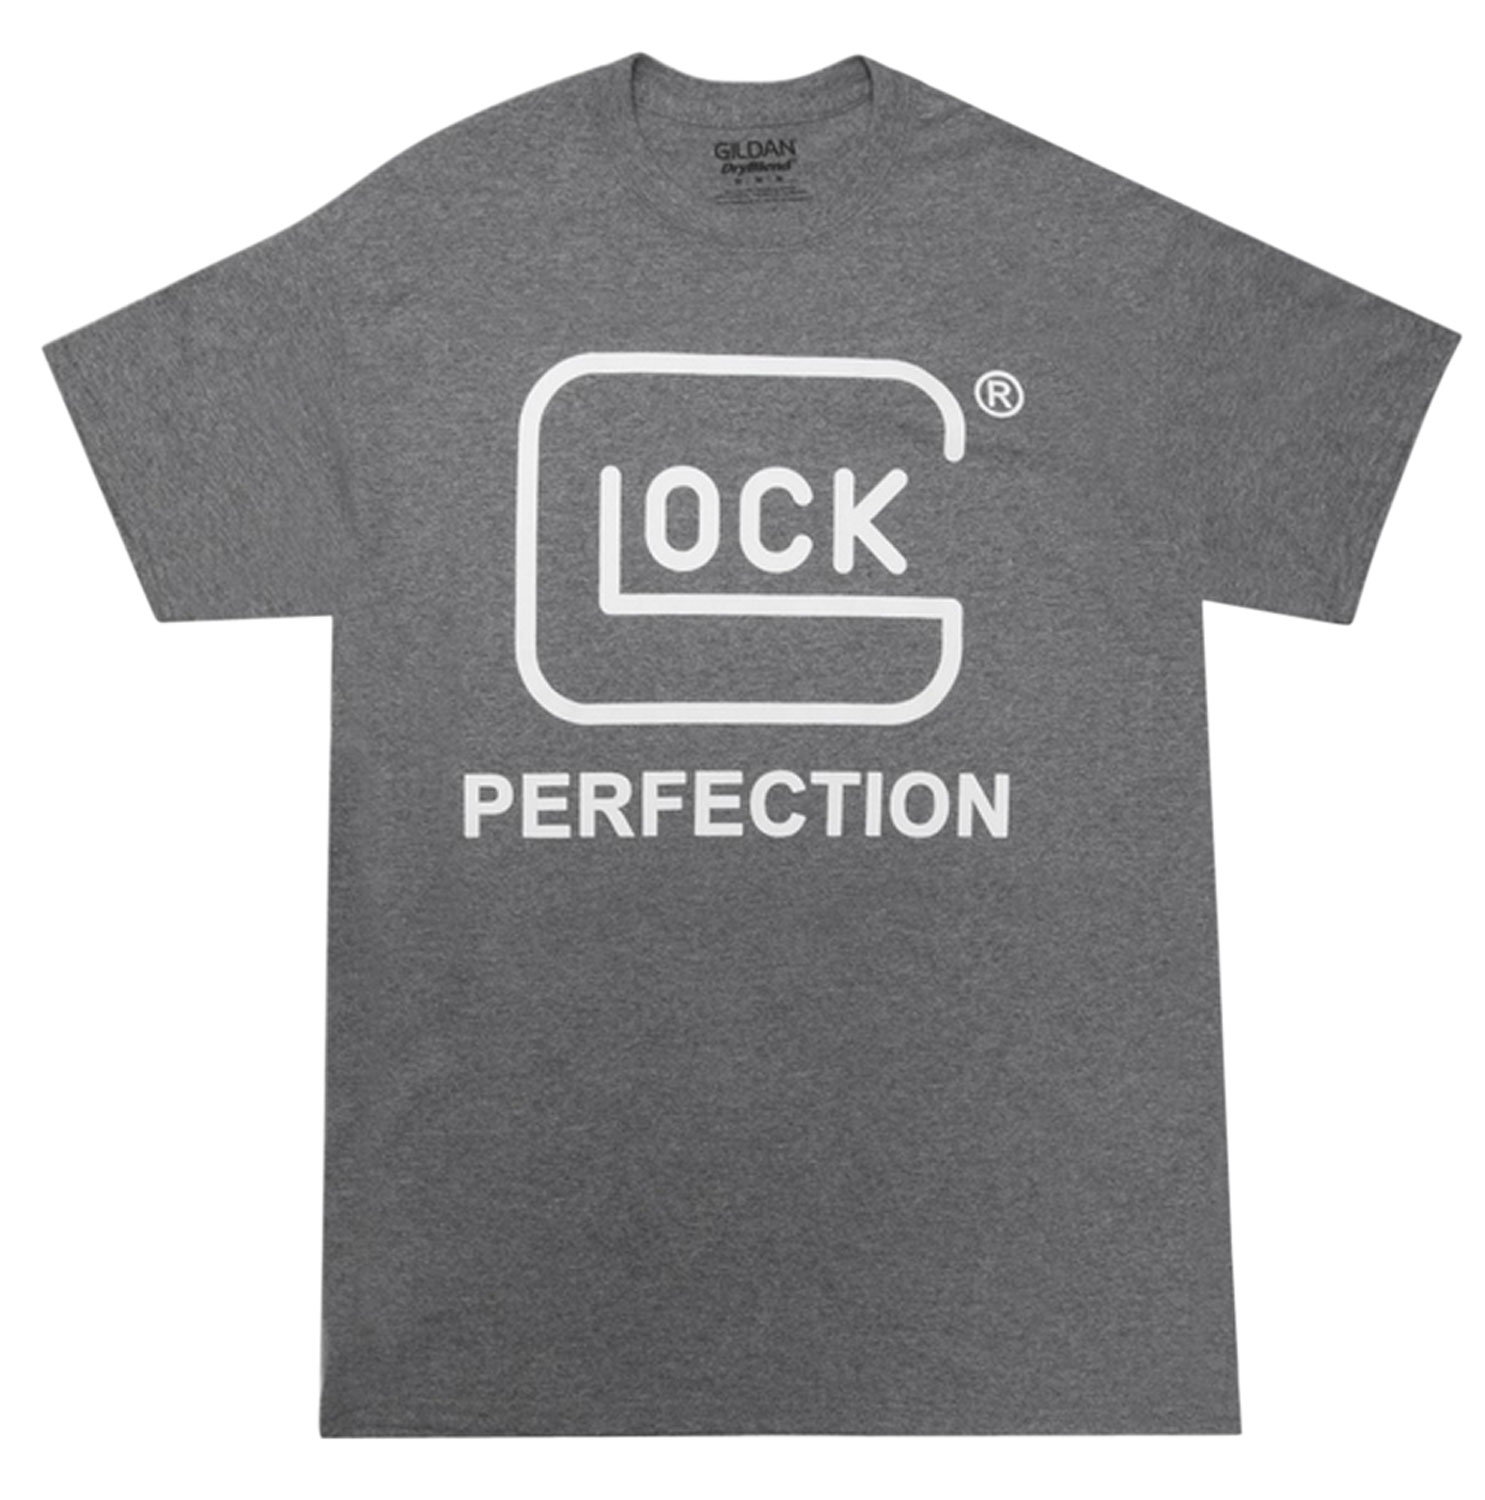 Glock AP95026 Perfection T-Shirt Short Sleeve Medium Gray